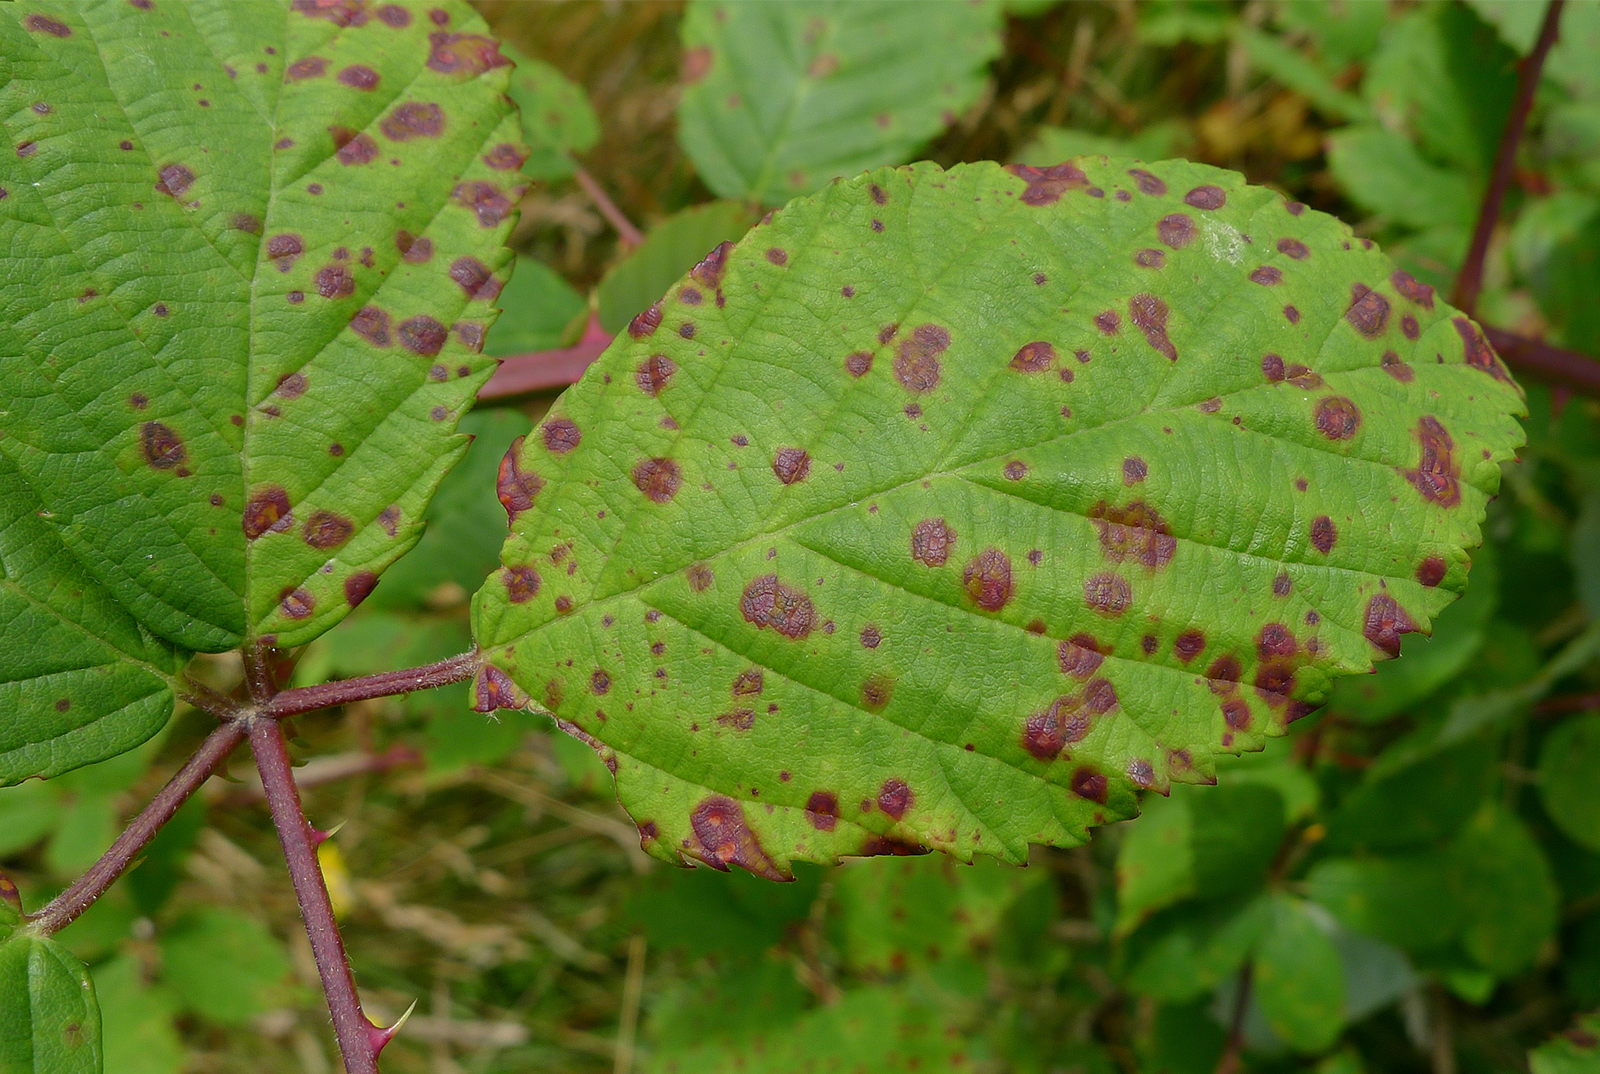 Rust fungus on blackberry leaf, by John Tann